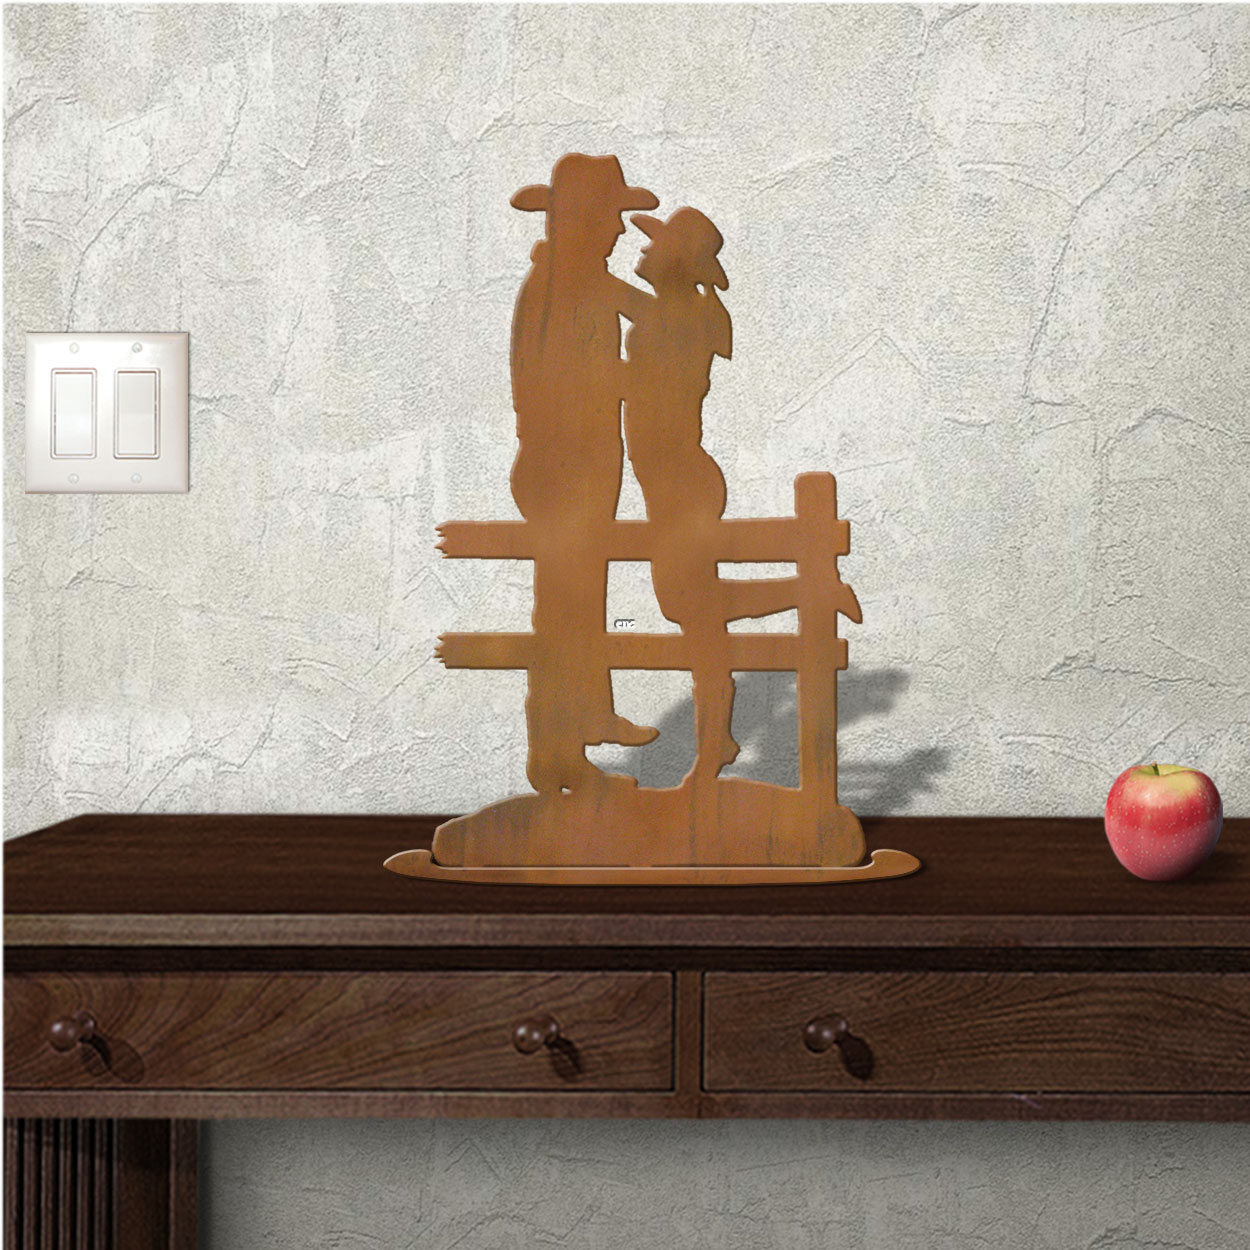 623404r - Tabletop Metal Sculpture - 11in W x 18in H - Cowboy Lovers - Rust Patina